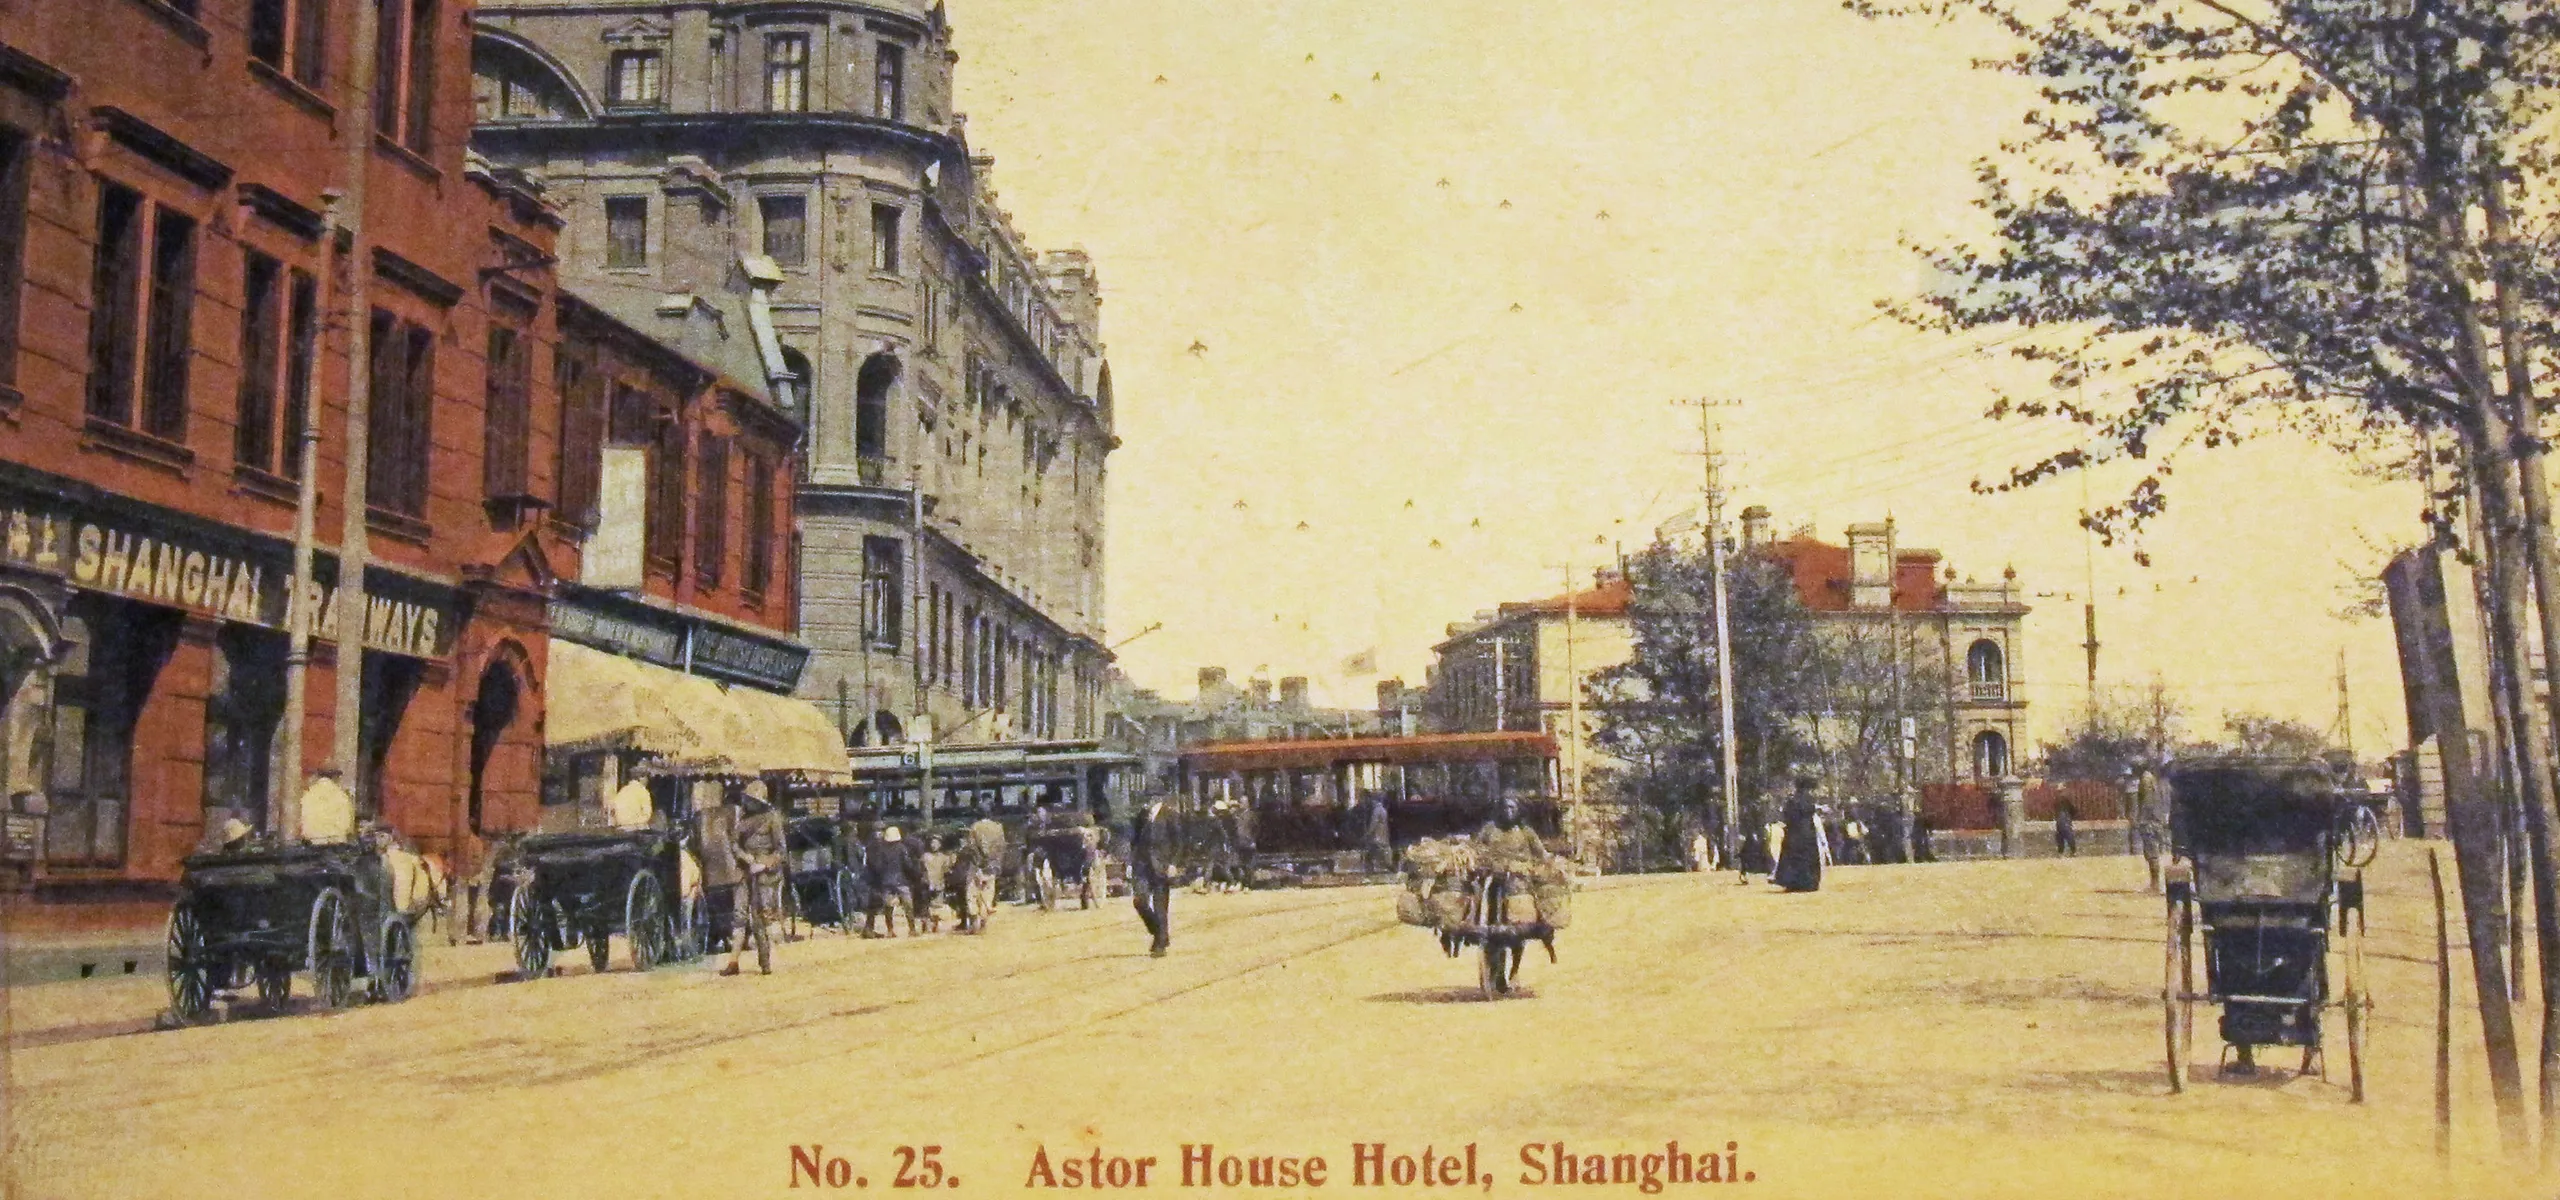 Postcard of Astor Hotel in Shanghai